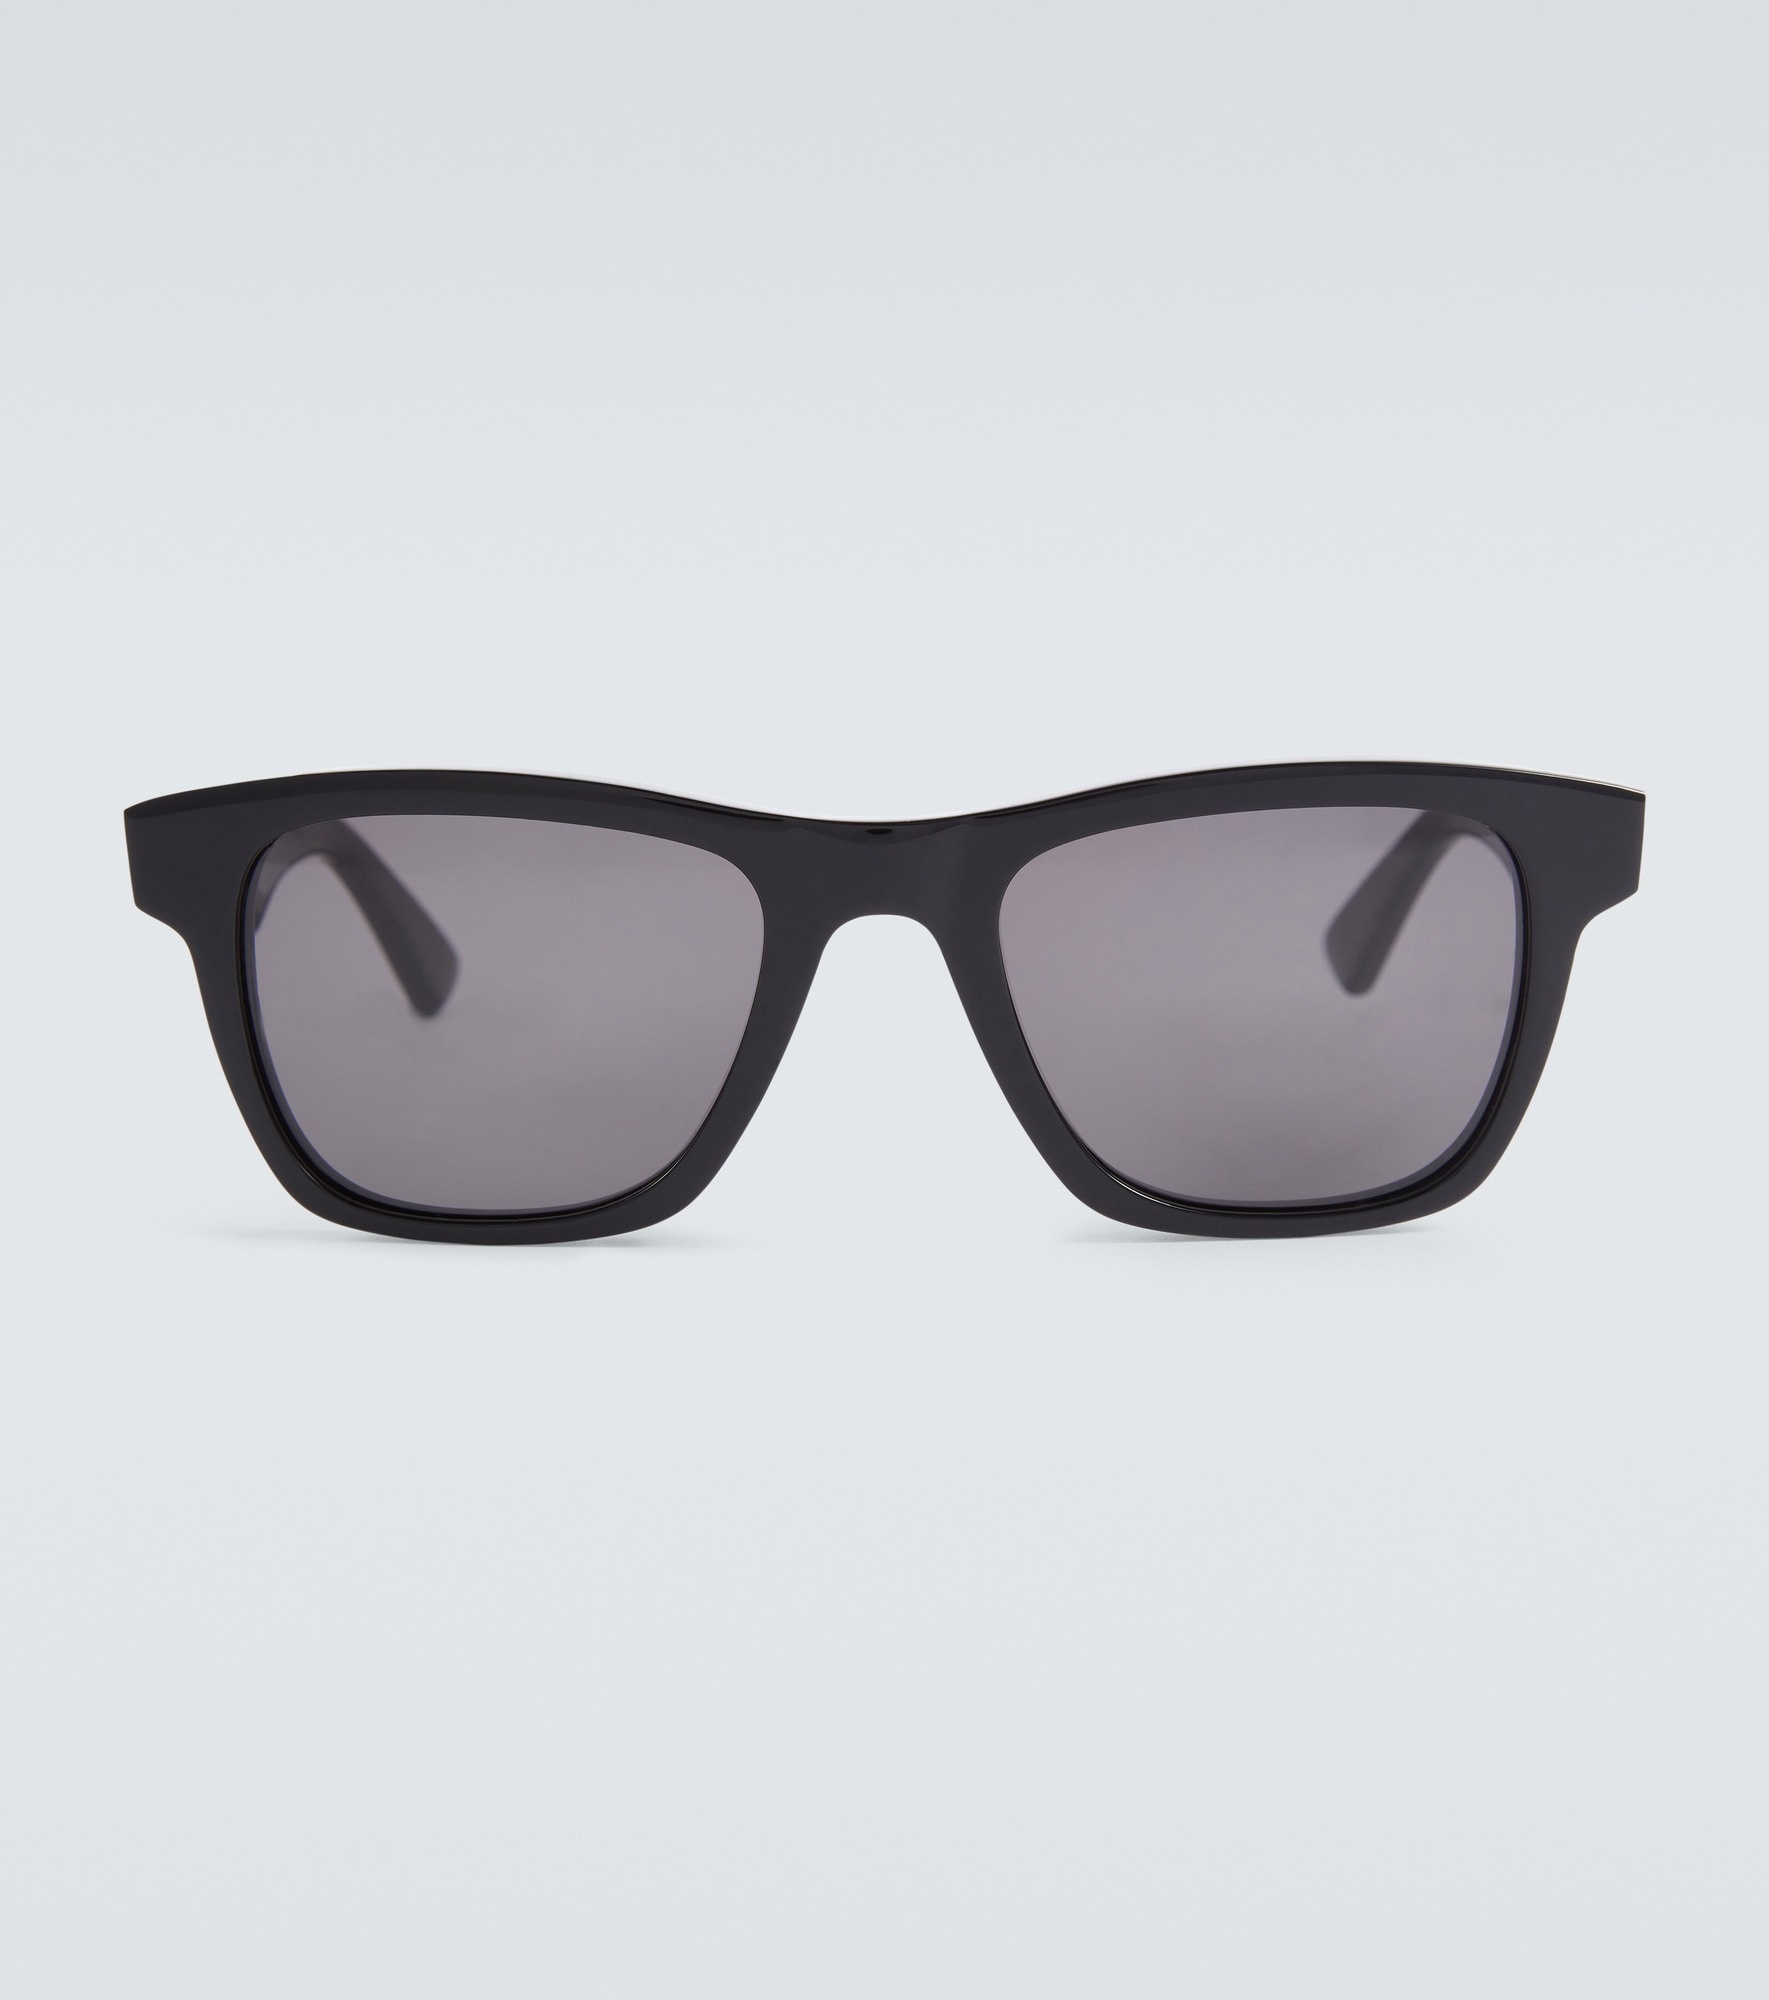 Acetate frame sunglasses - 1